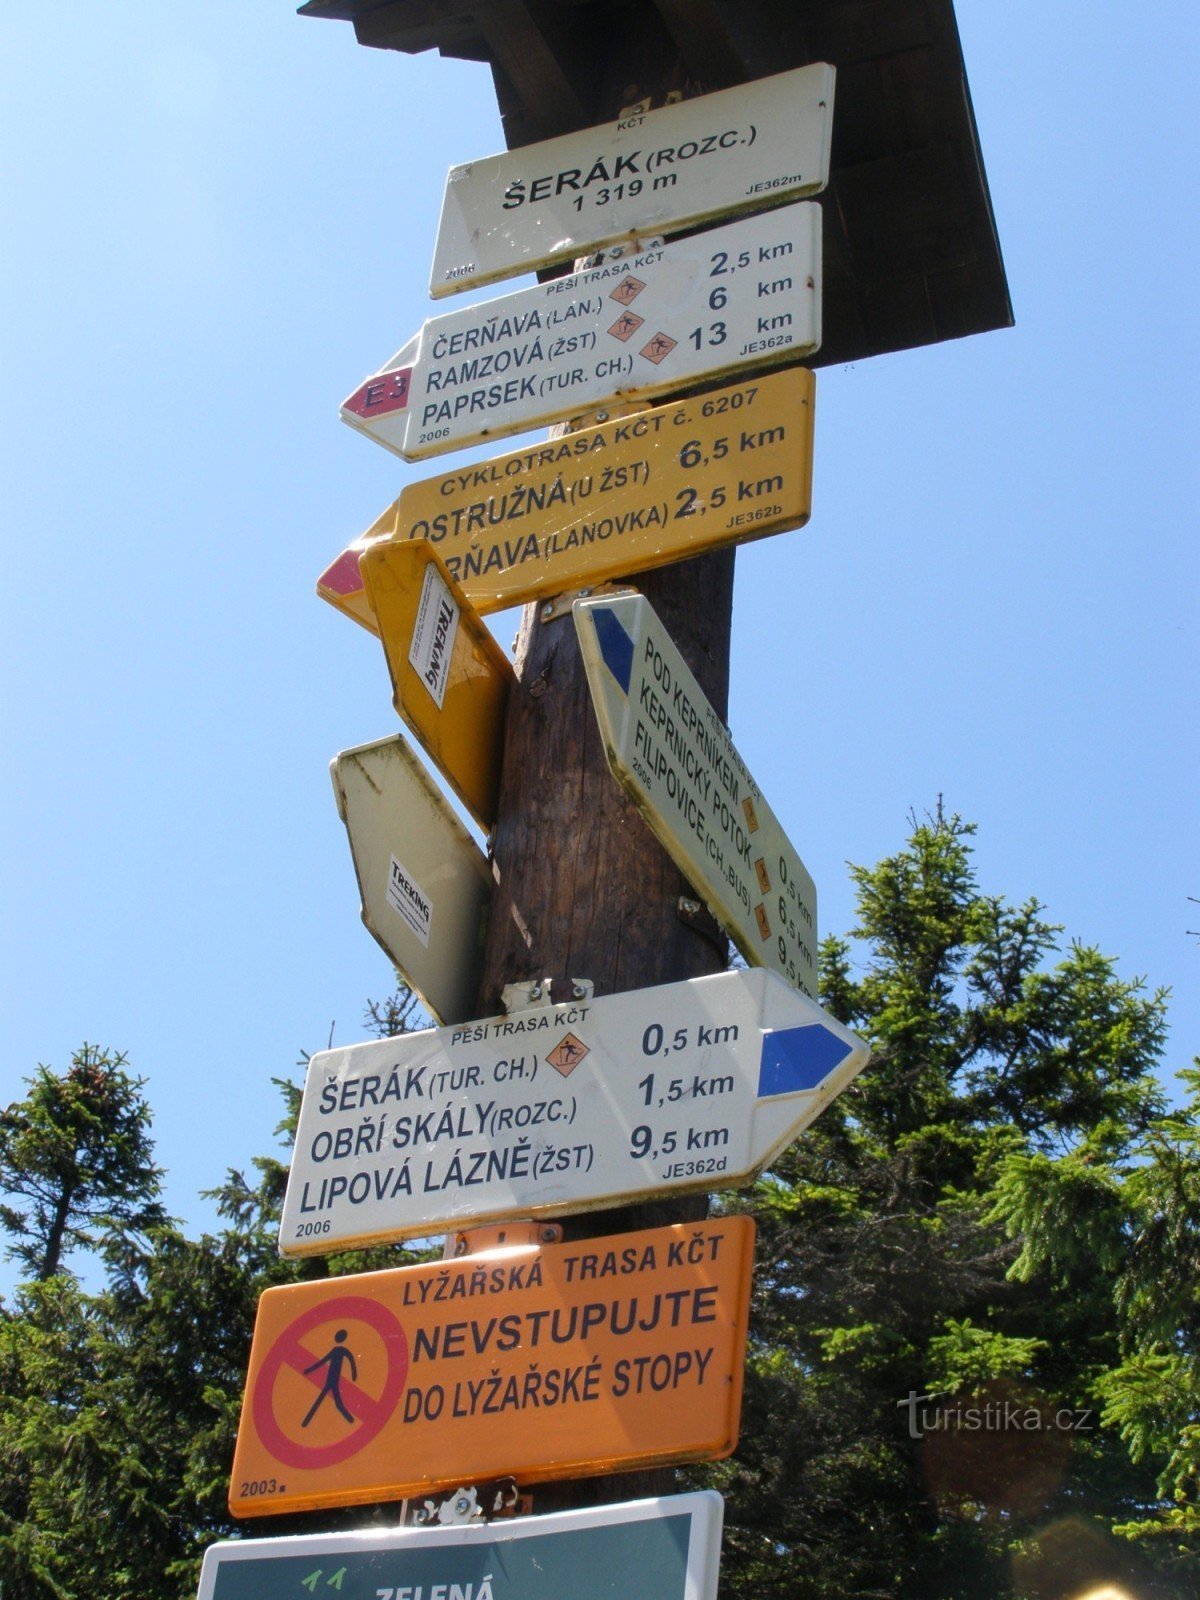 toeristisch kruispunt - Šerák, kruispunt